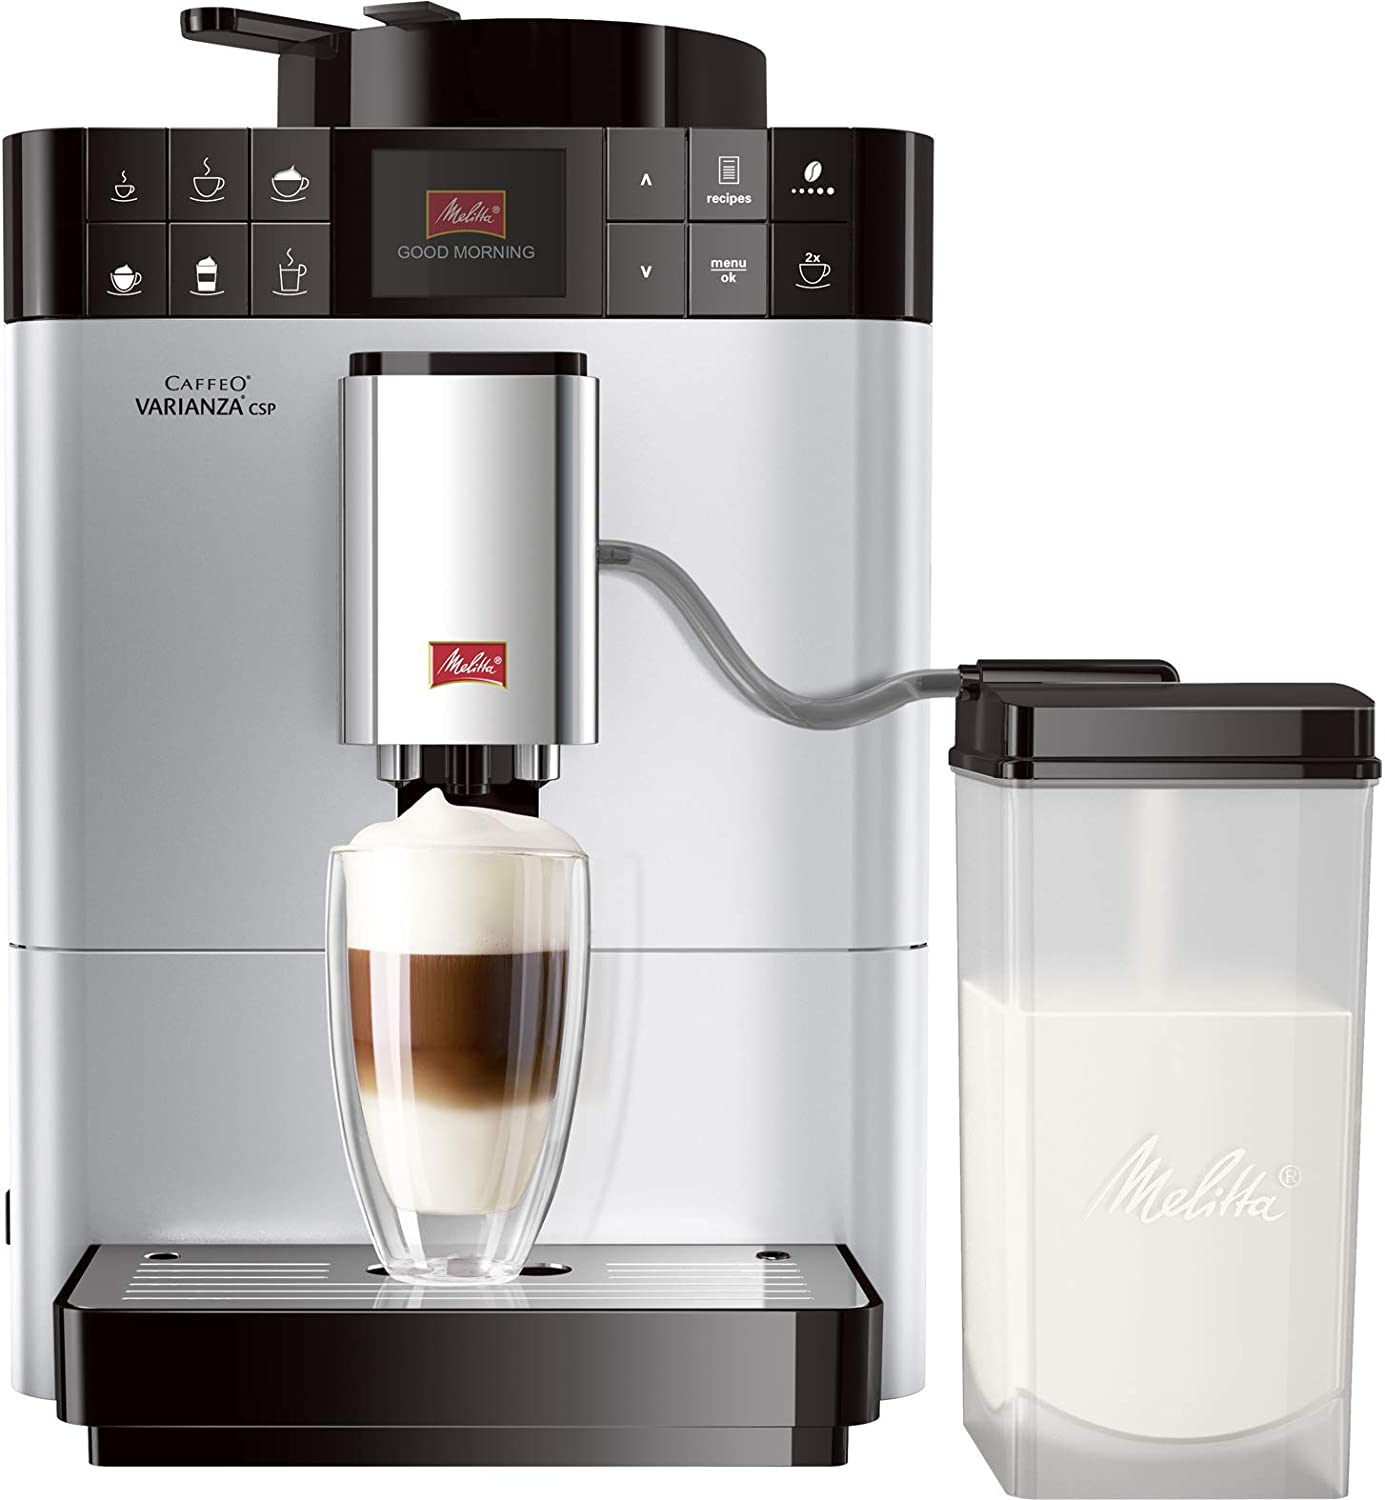 Melitta F57/0-101 Caffeo Varianza CSP Bean-To-Cup Coffee Machine in Silver + Melitta 206056 Thermal Mug, Coffee machine + set of 6 care set, Black